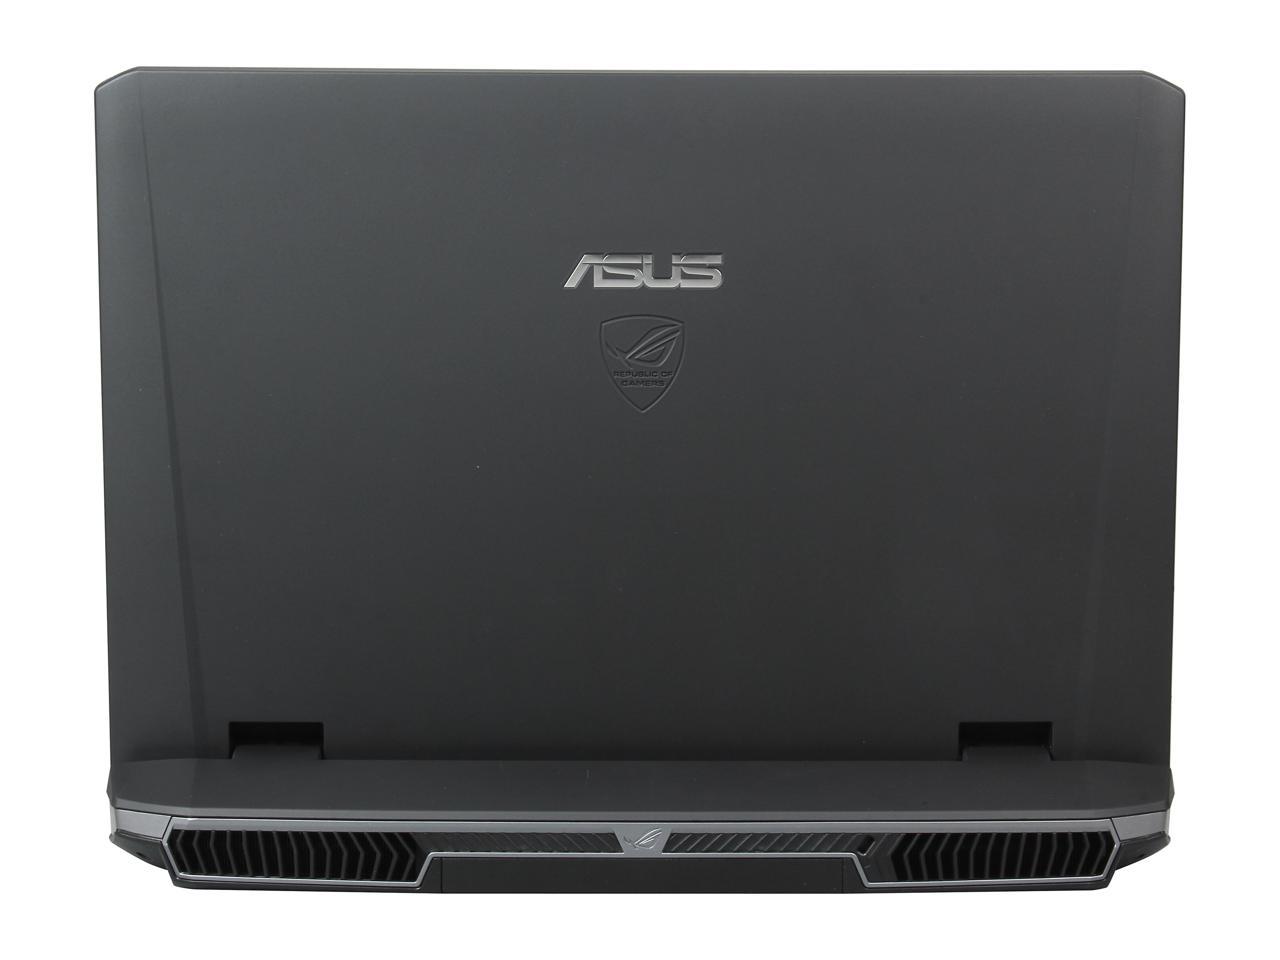 Refurbished: ASUS G75VW-FS71 Gaming Laptop Intel Core i7-3610QM 2.3GHz ...